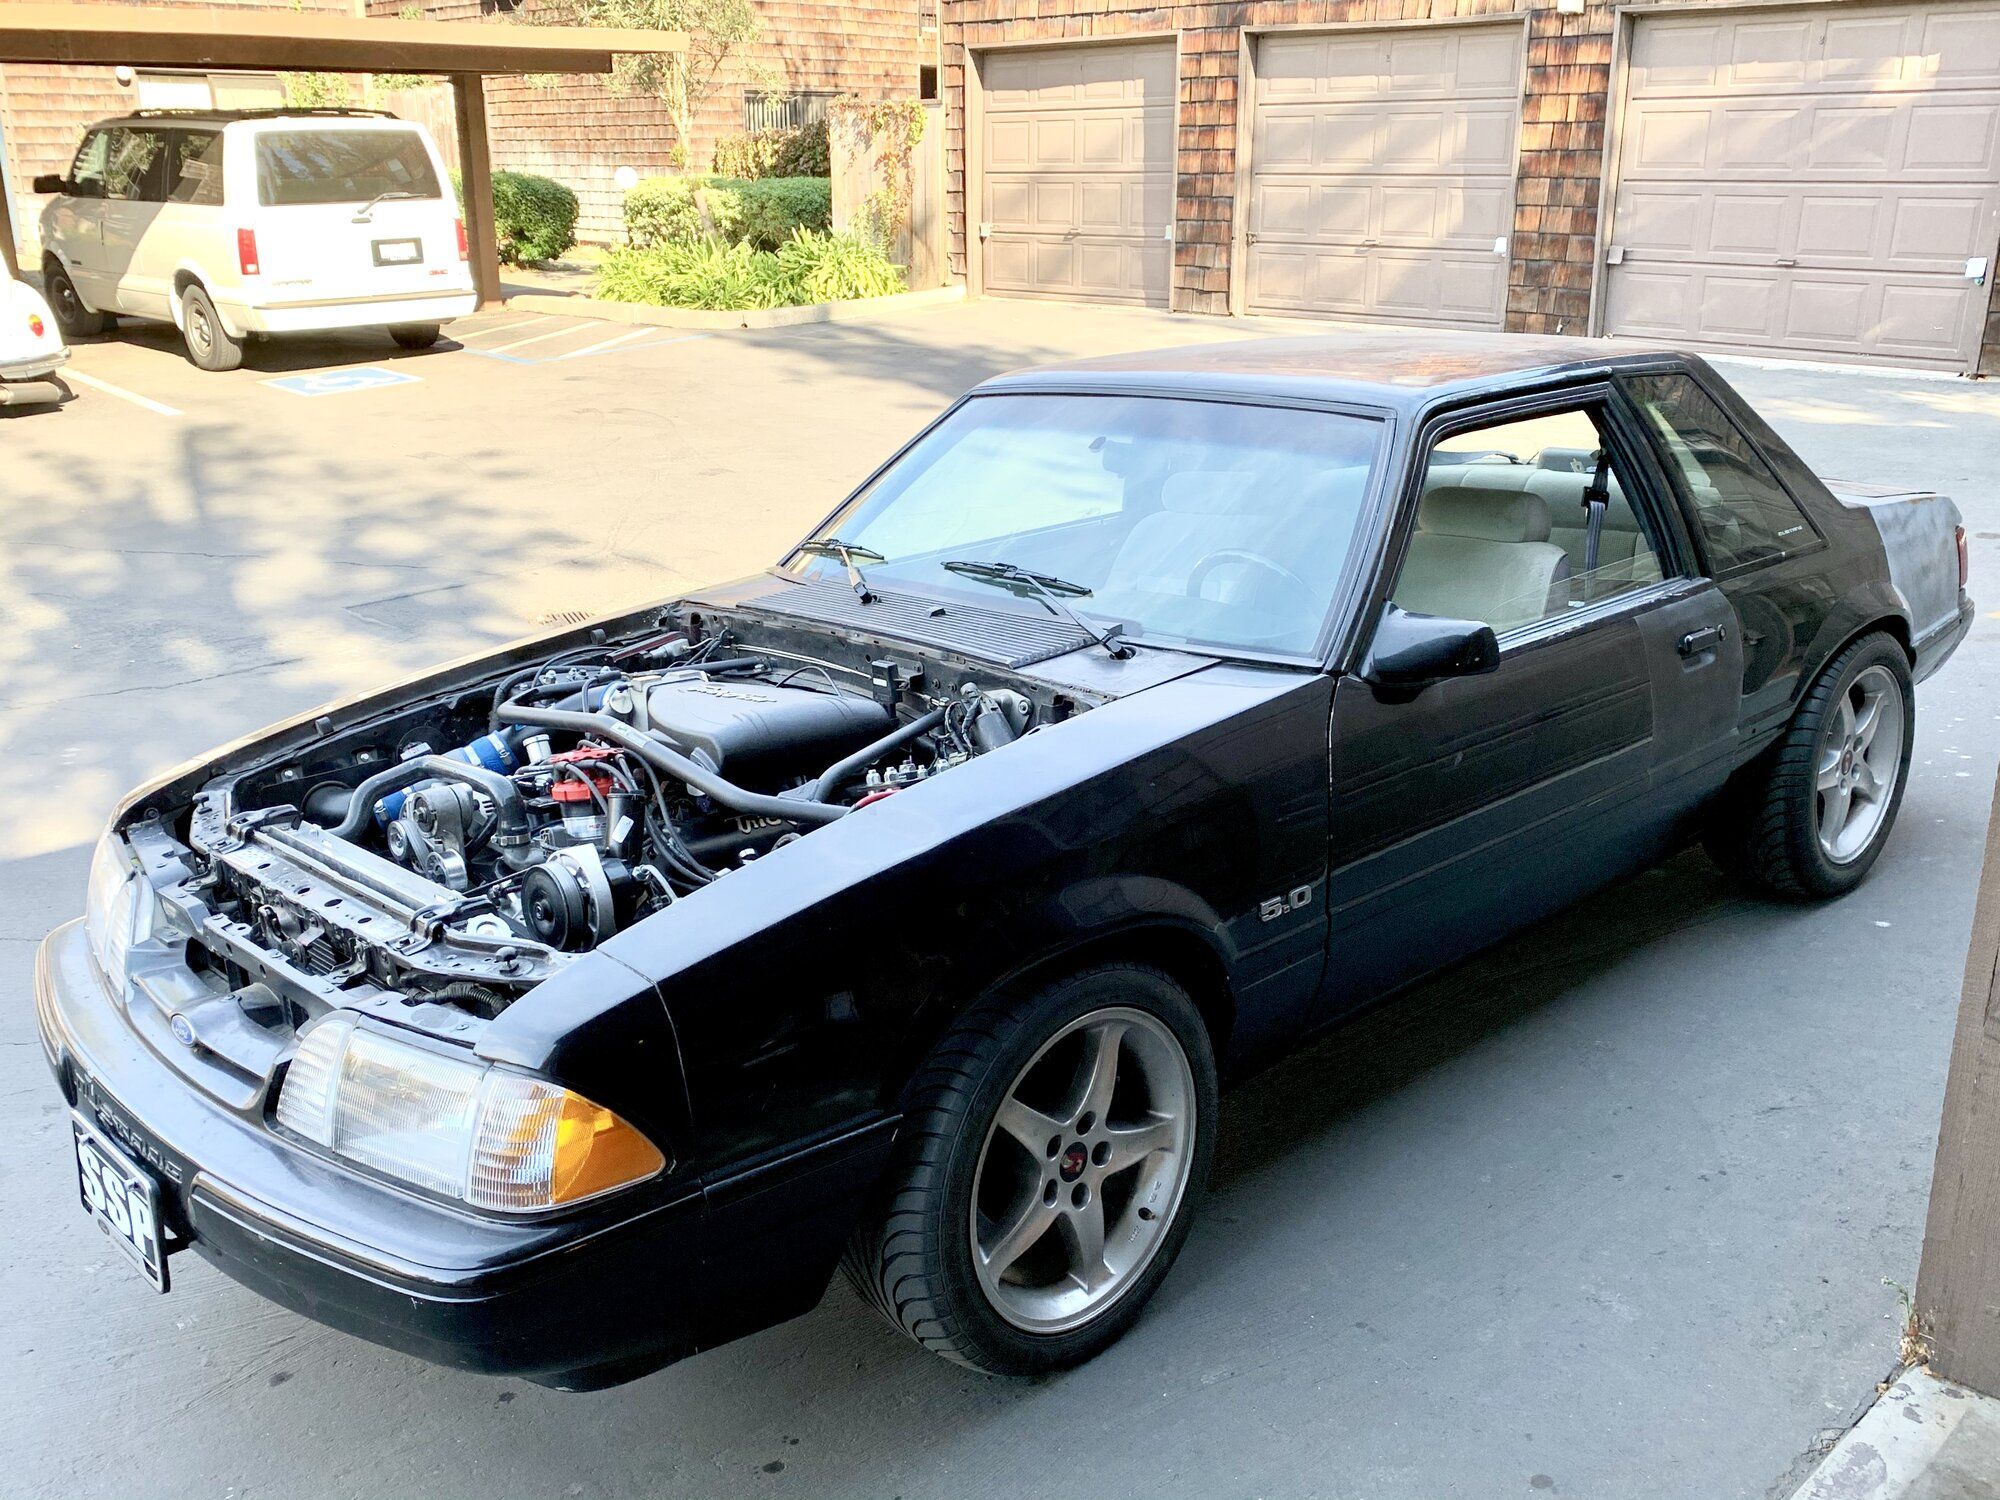 1993 Mustang
(93calicoop)